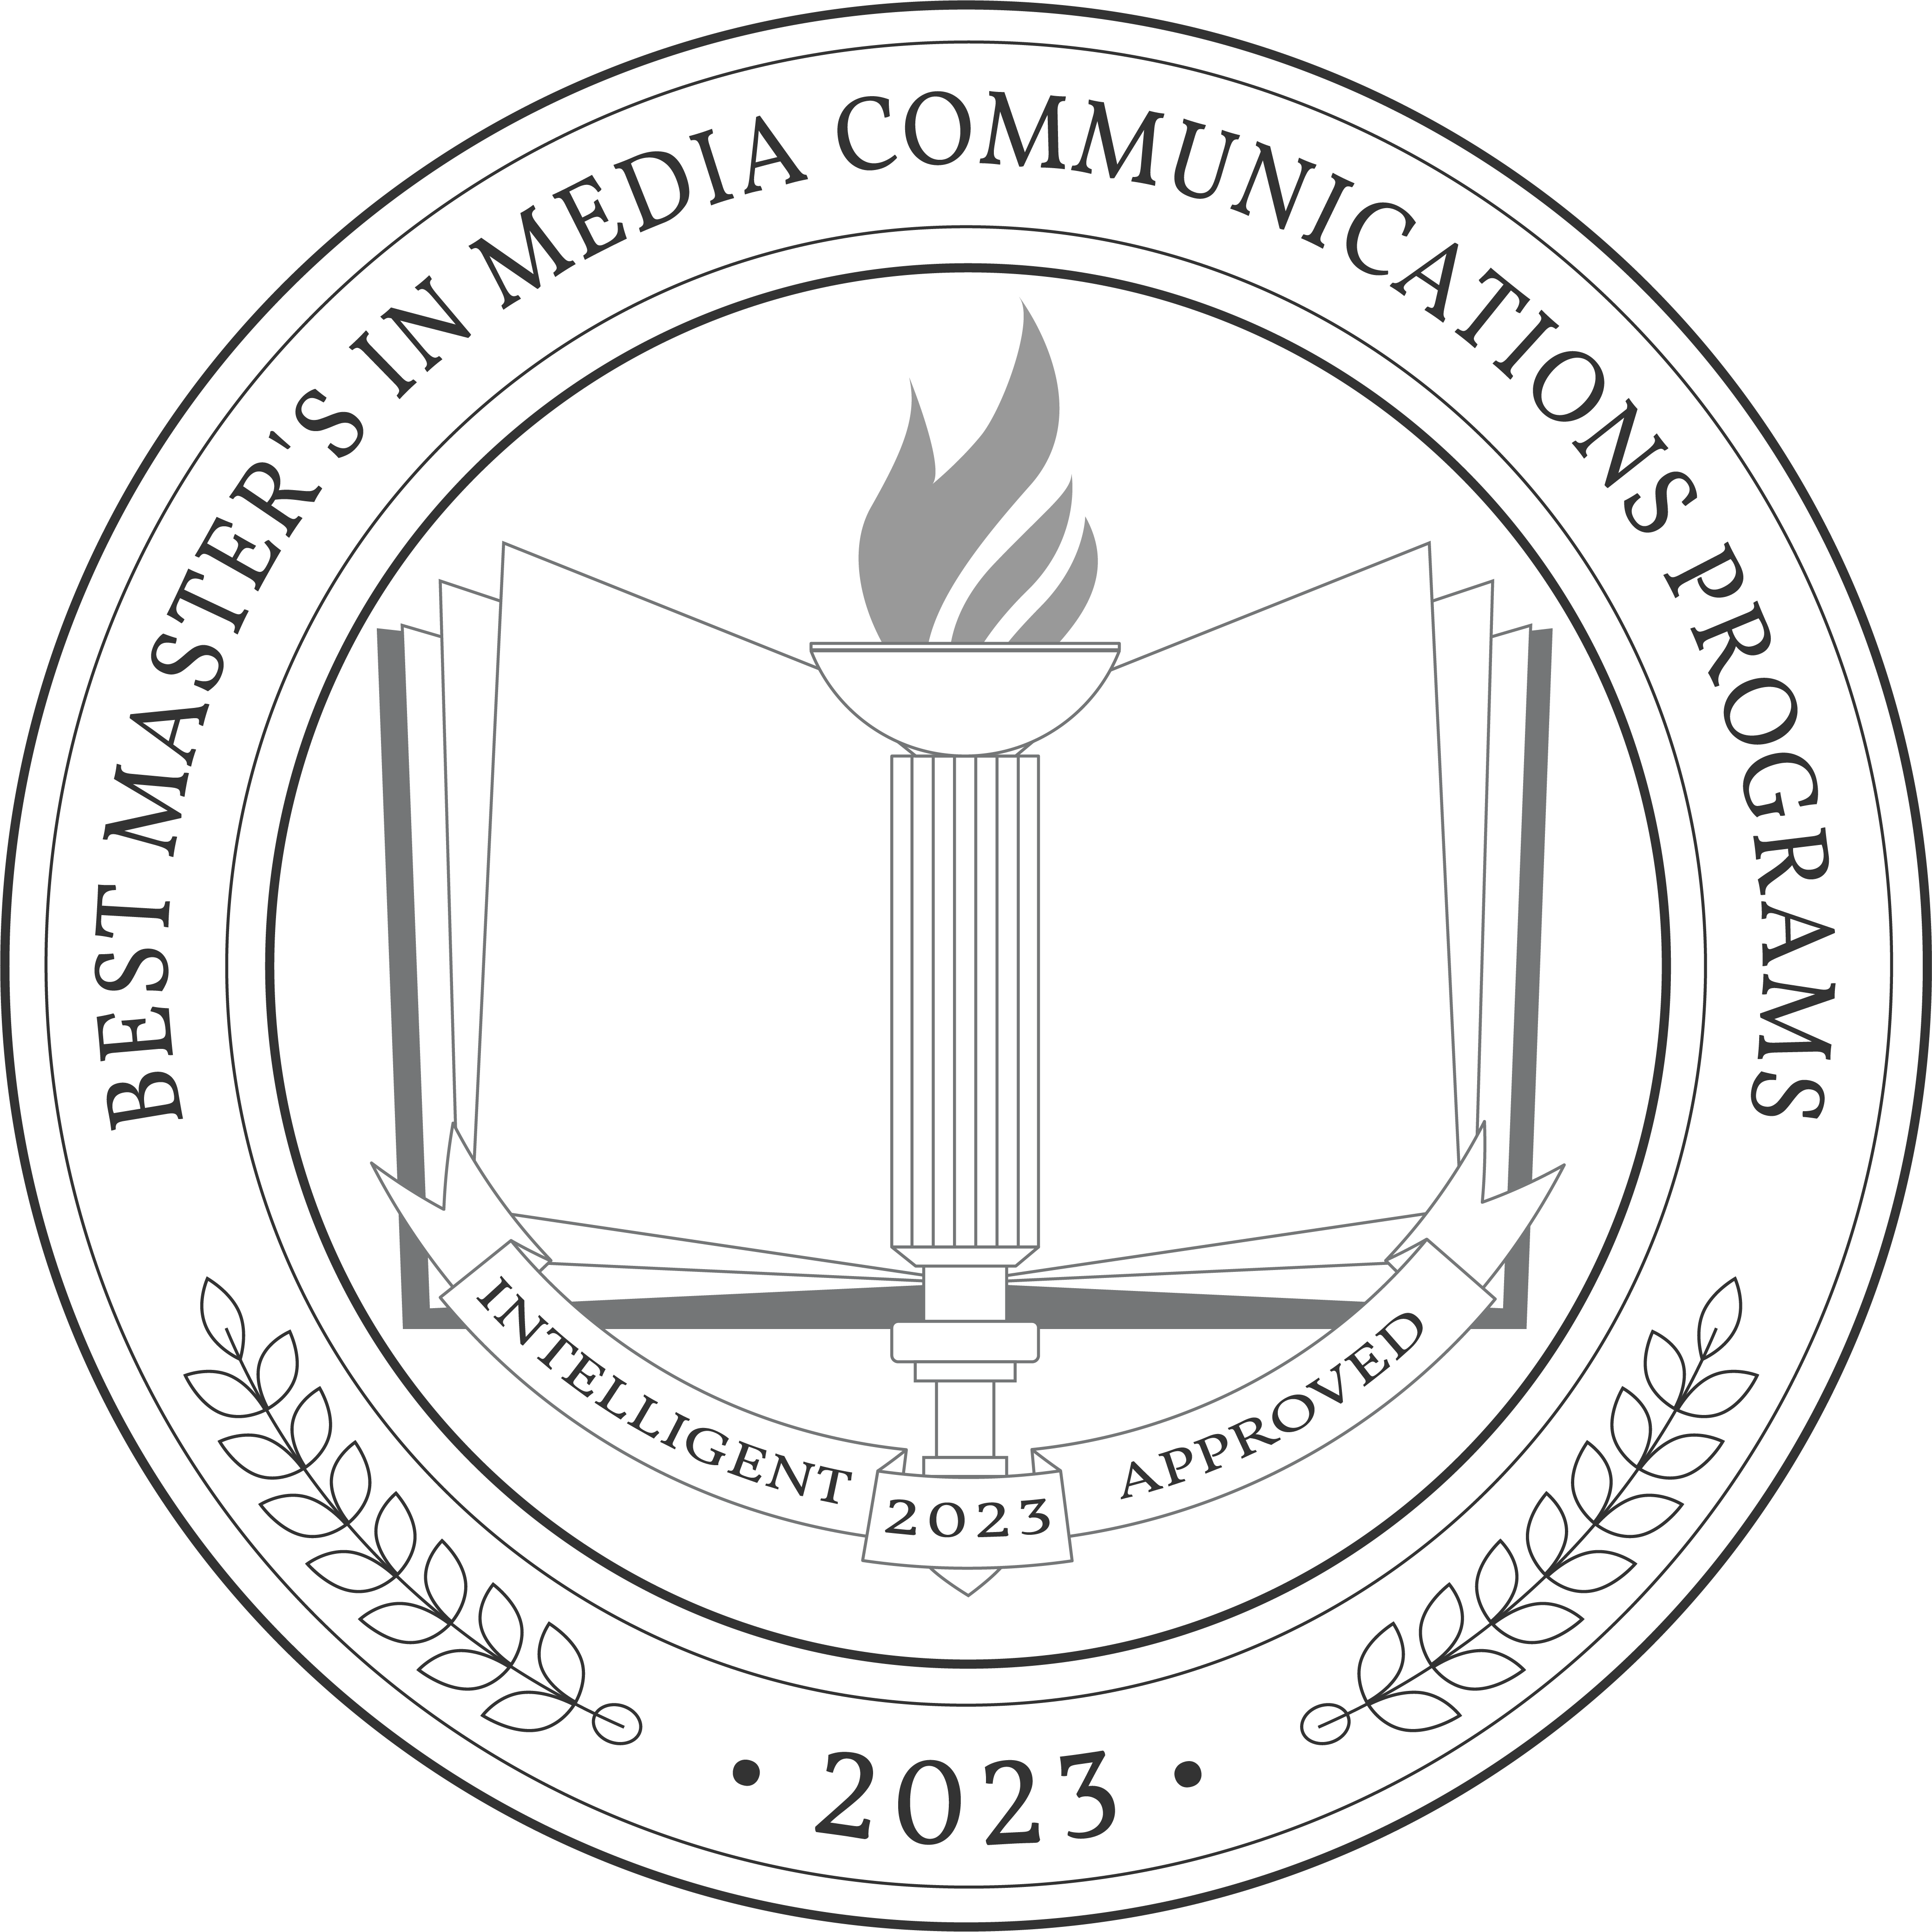 Best Master's in Media Communications Programs badge